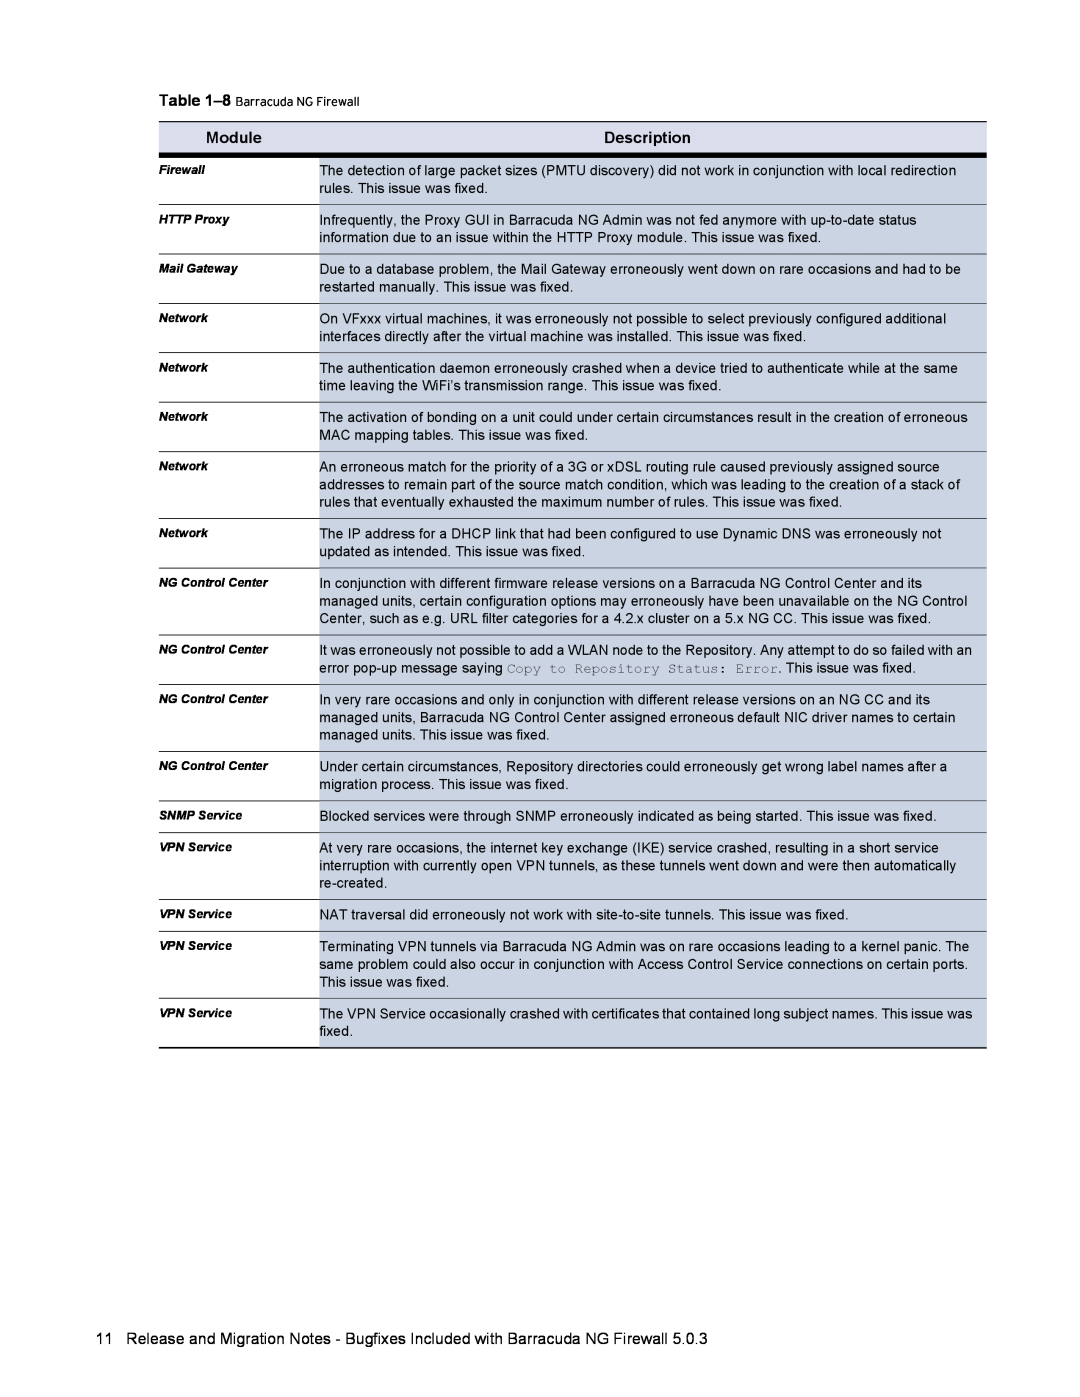 Barracuda Networks 5.0.3 manual Module, Description 